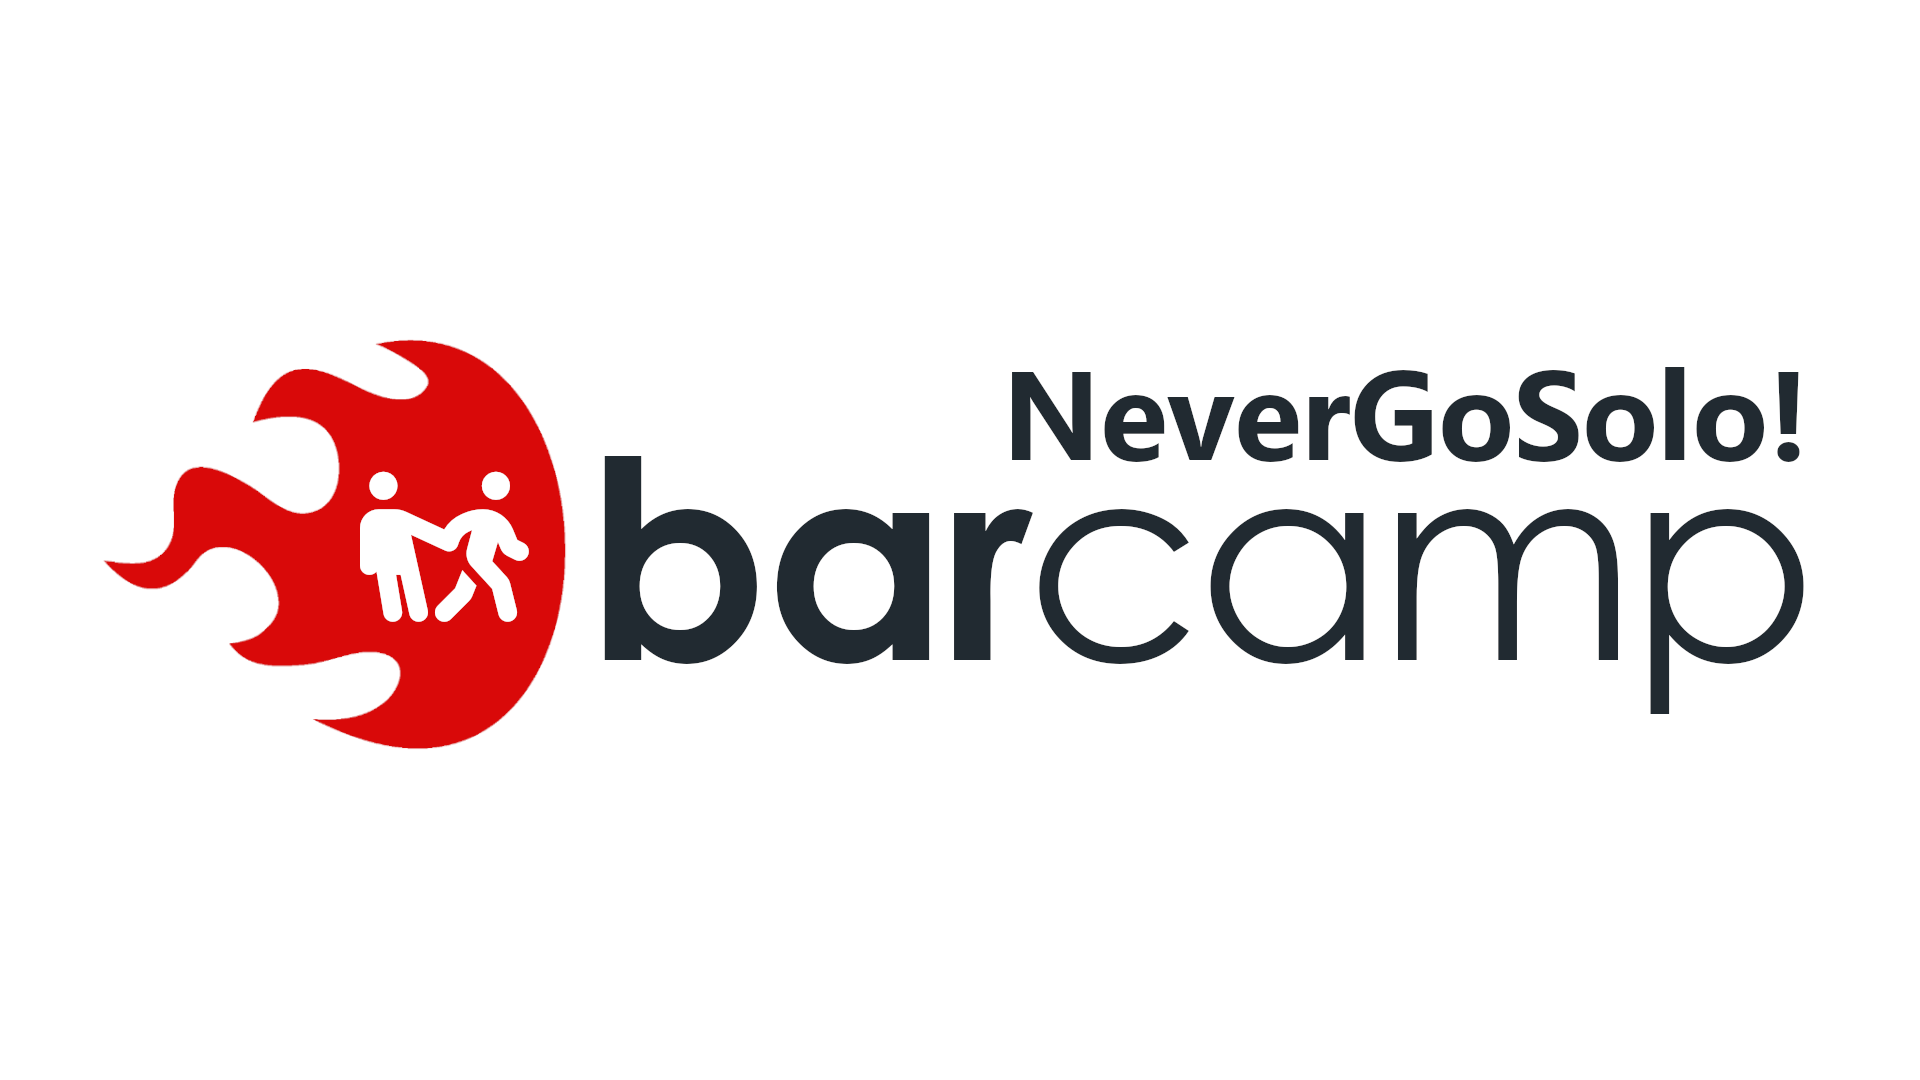 NeverGoSolo! Barcamp